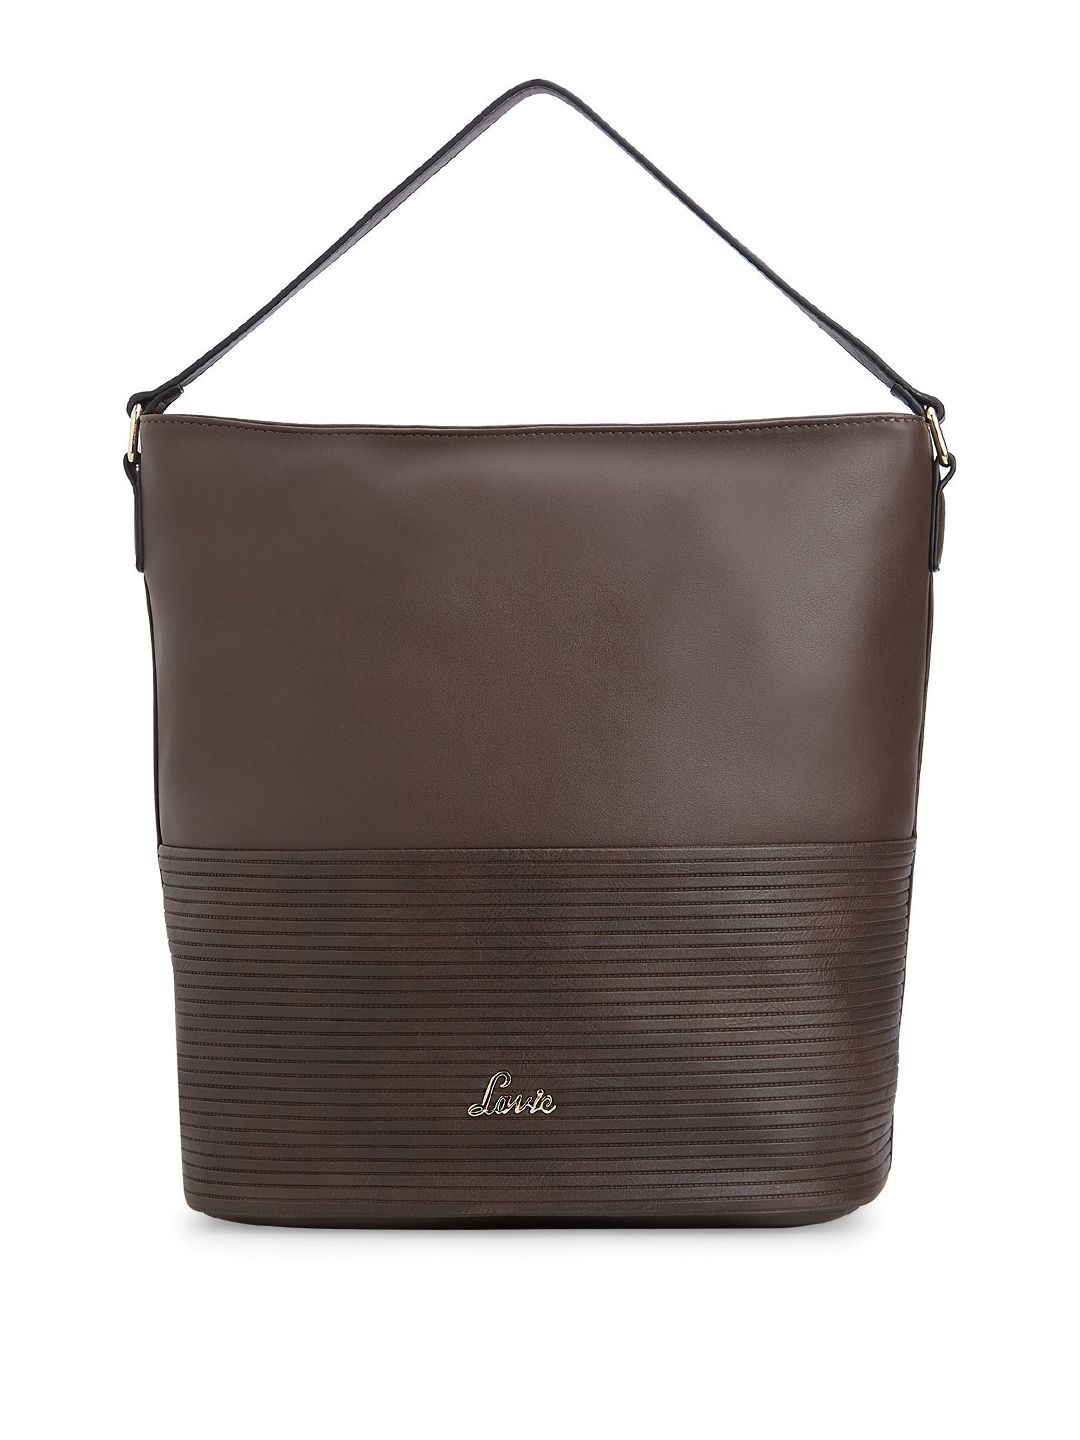 Lavie Women Brown Solid Handheld Bag Price in India